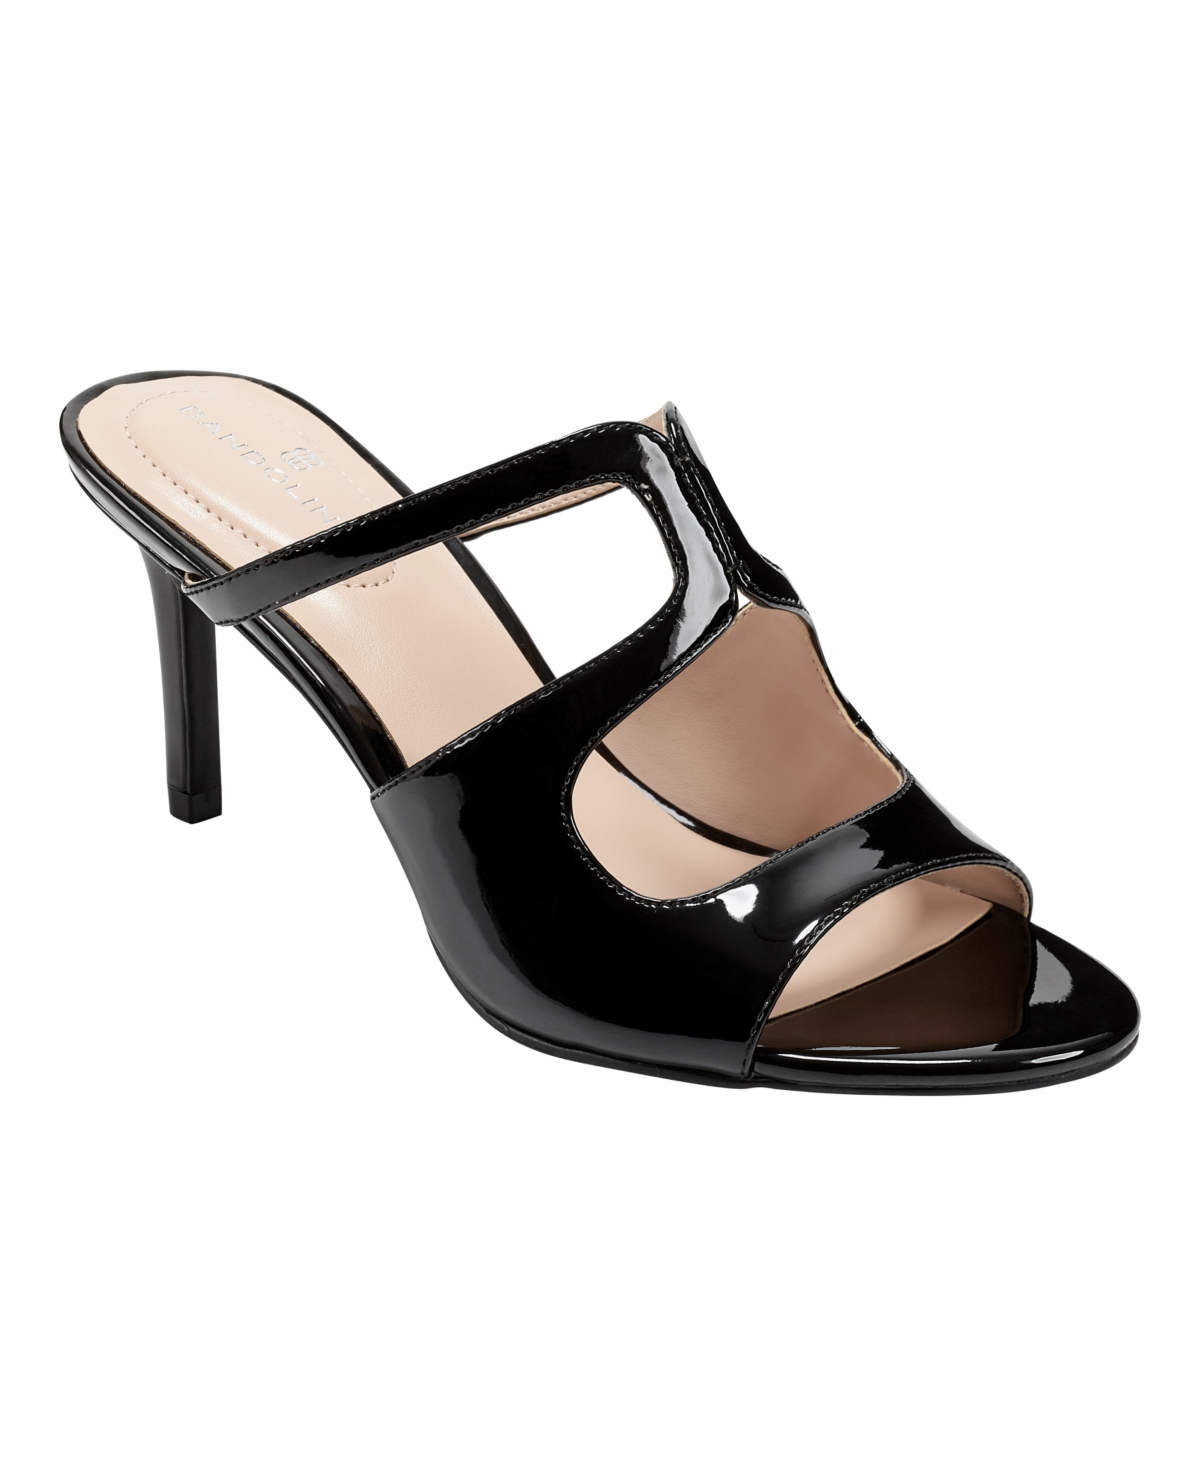 Women's Mizelle Open Toe Slip-On Dress Sandals - Black Faux Patent Leather